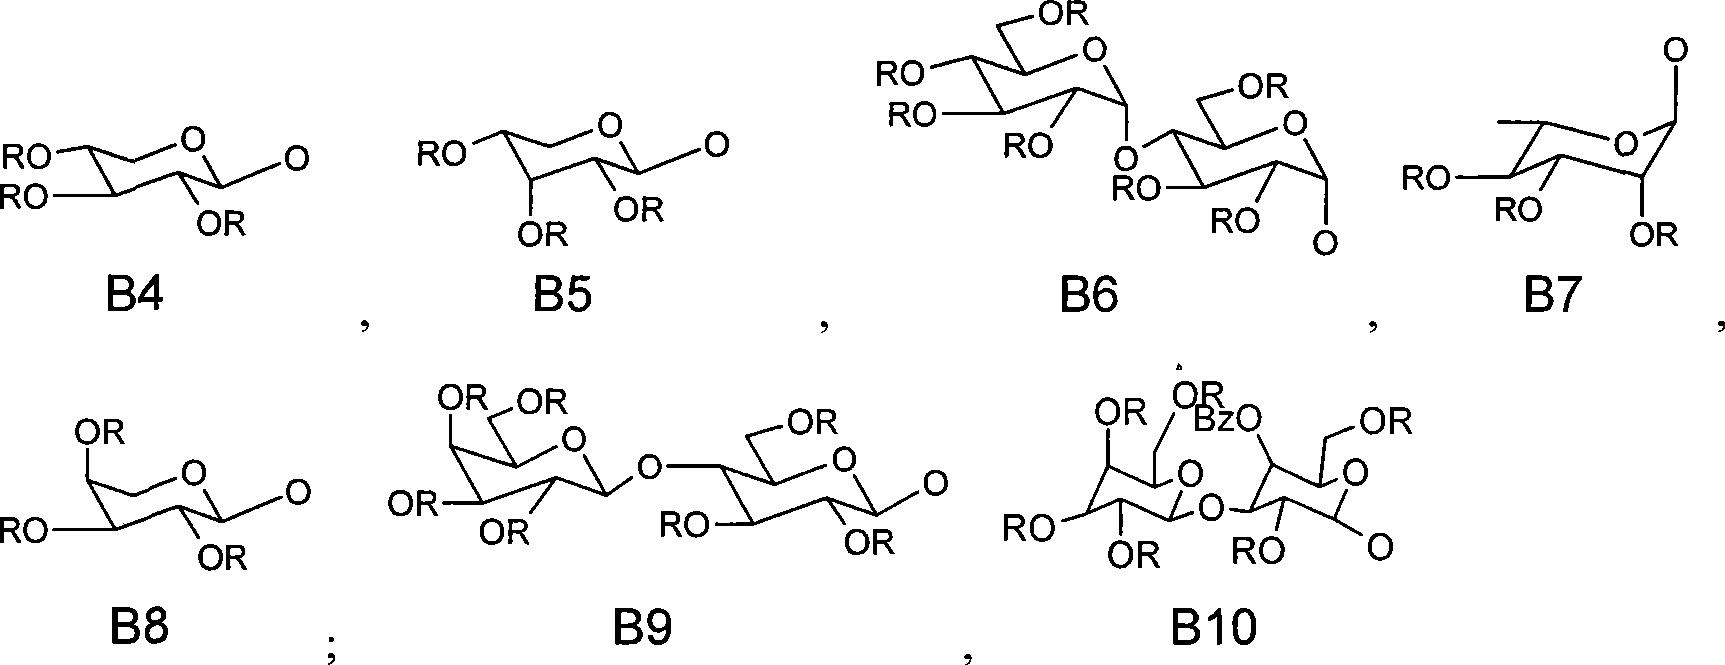 Method for preparing activity constituent rosavin derivates in rhodiola rosea and application